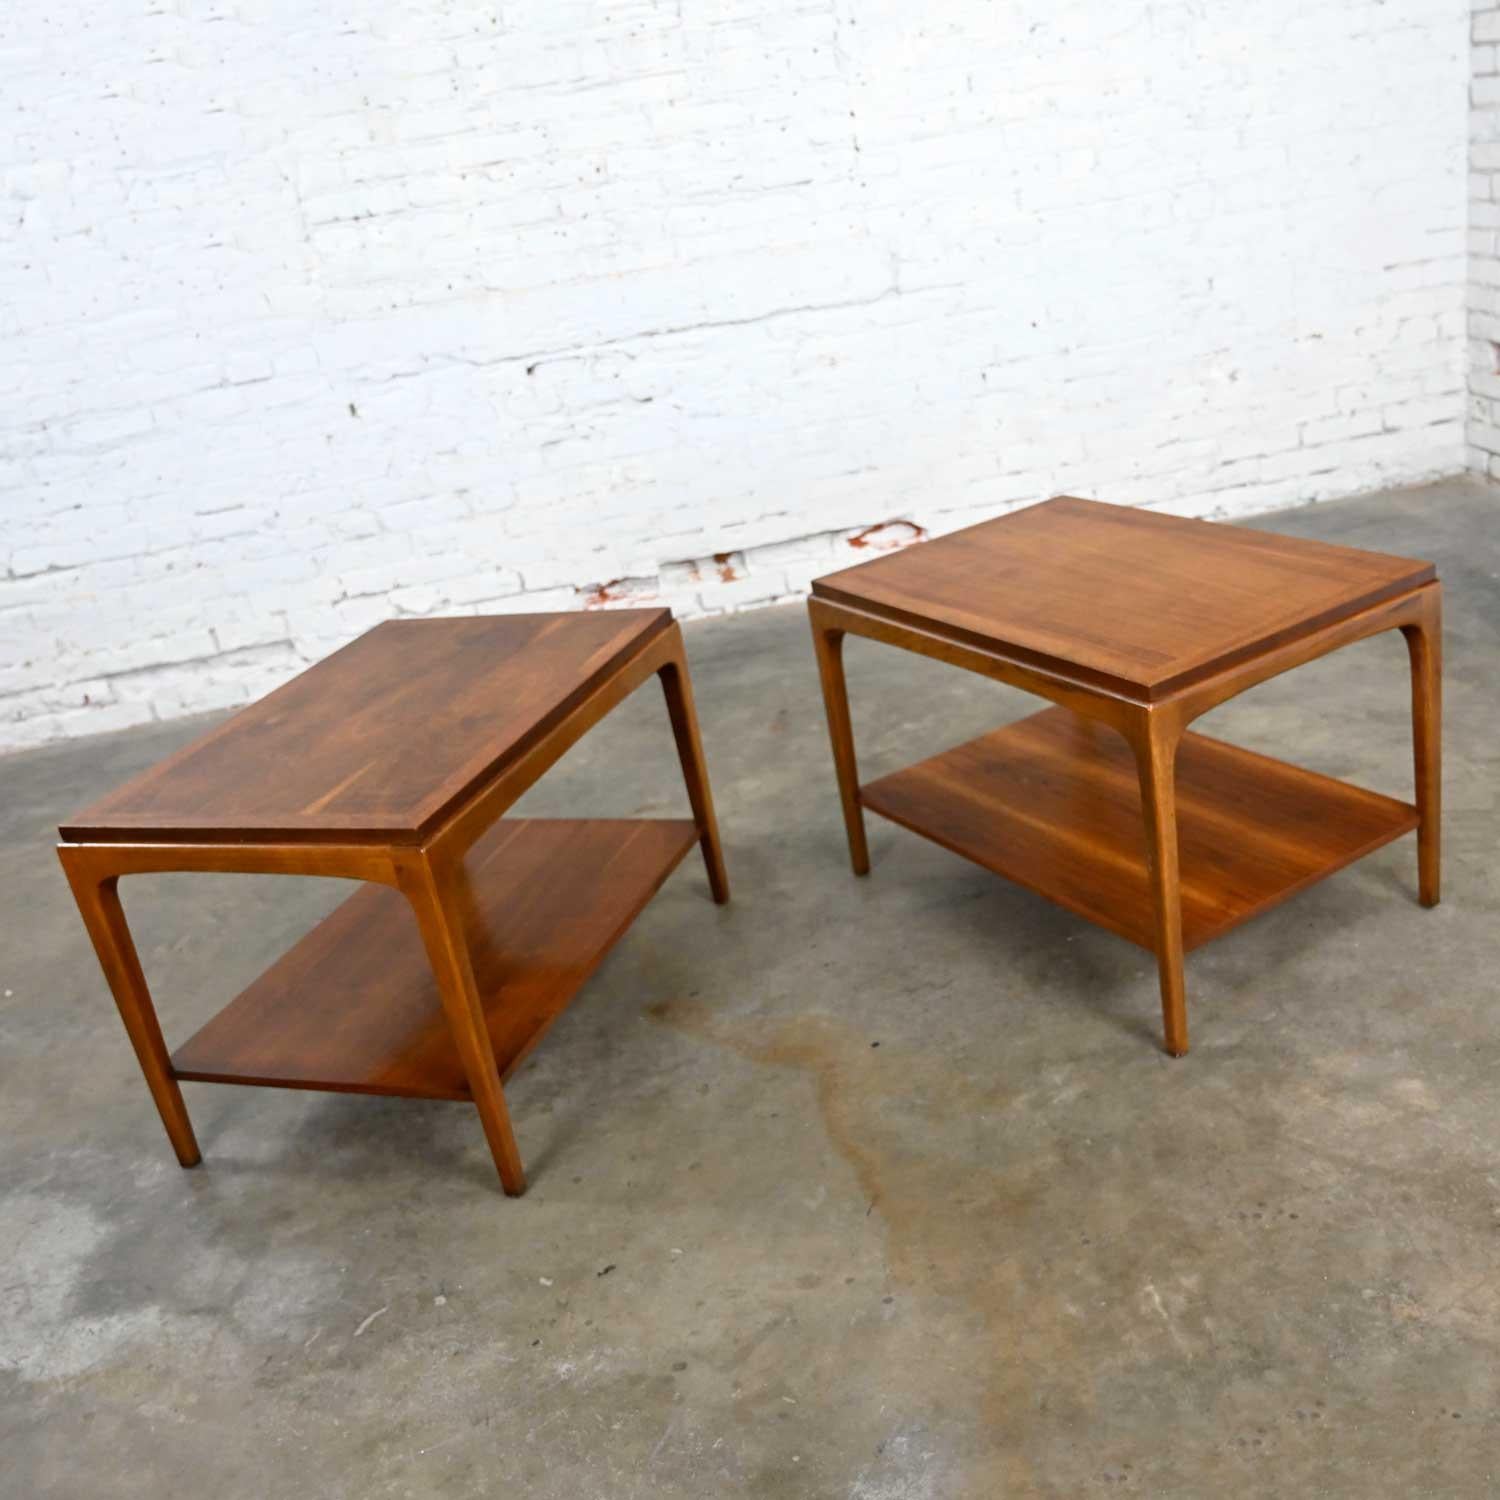 Plated Lane Rhythm Pair of Mid-Century Modern Walnut End Tables with Lower Shelf